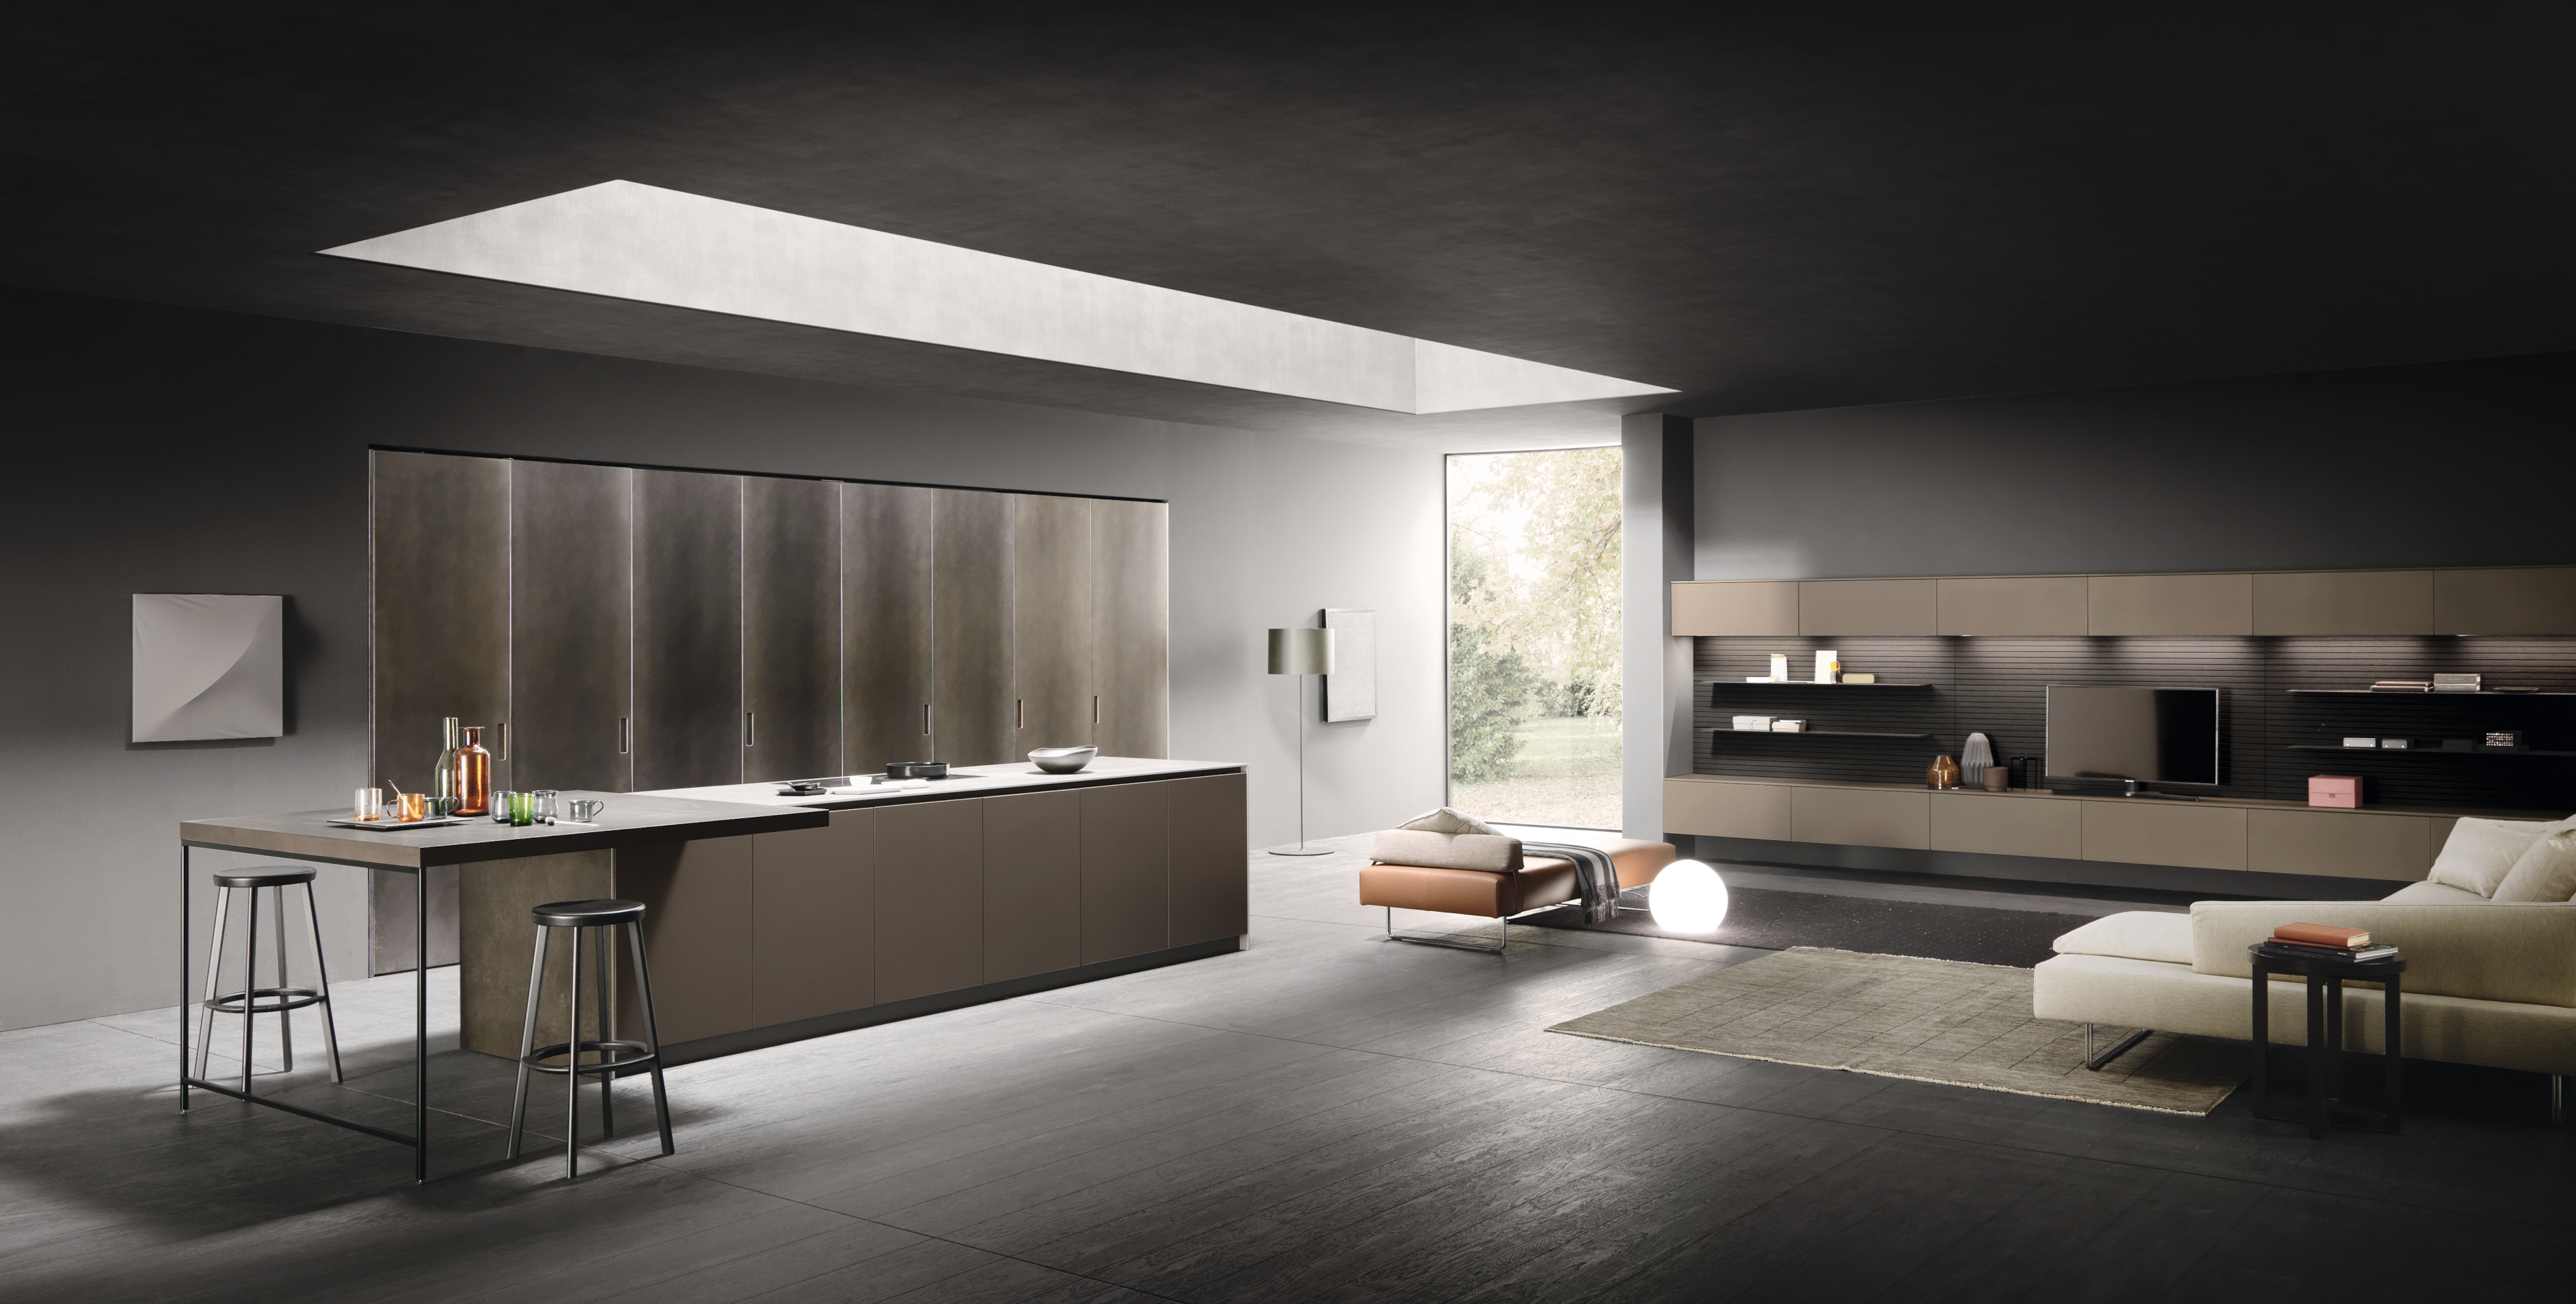 High-end kitchen appliances in a modern design - Pedini Miami